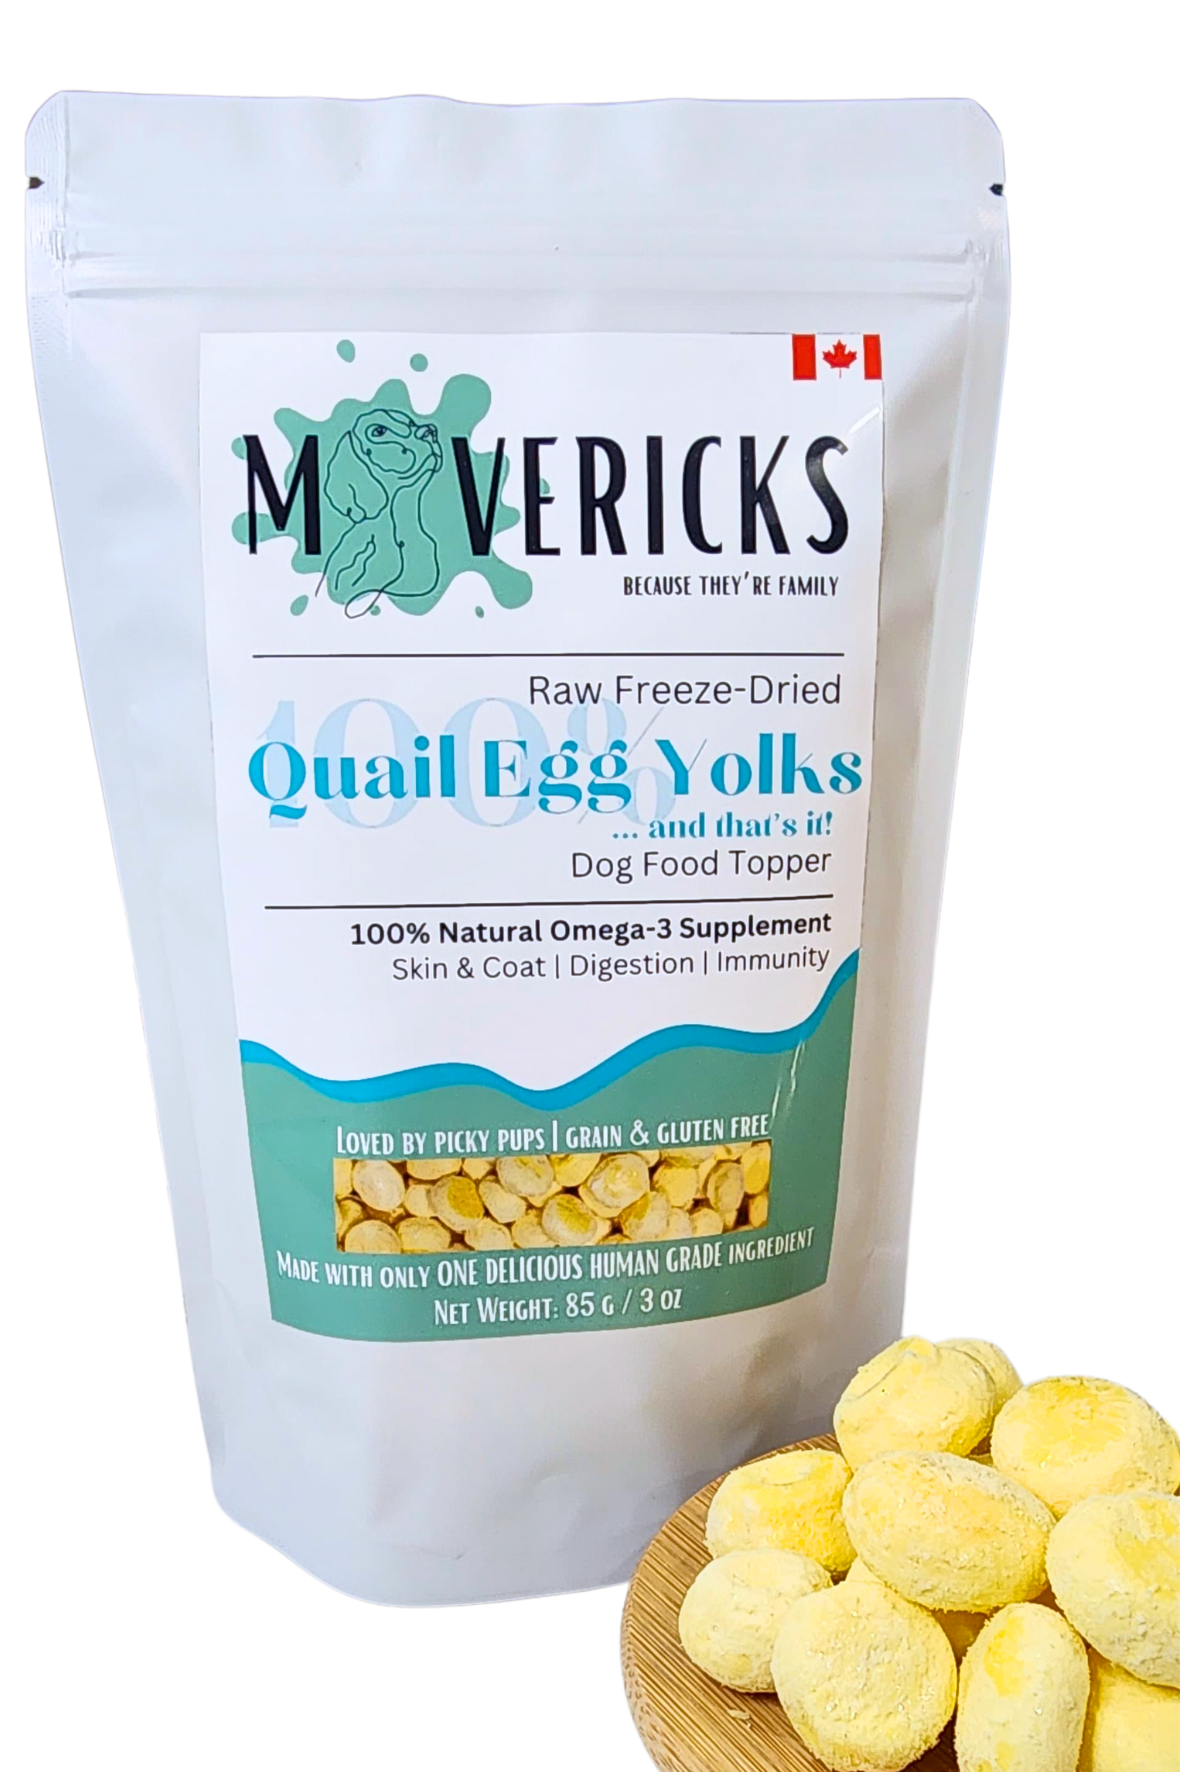 Freeze Dried Quail Egg Yolks for Dogs, Skin & Coat, Antioxidant Dog Food Topper